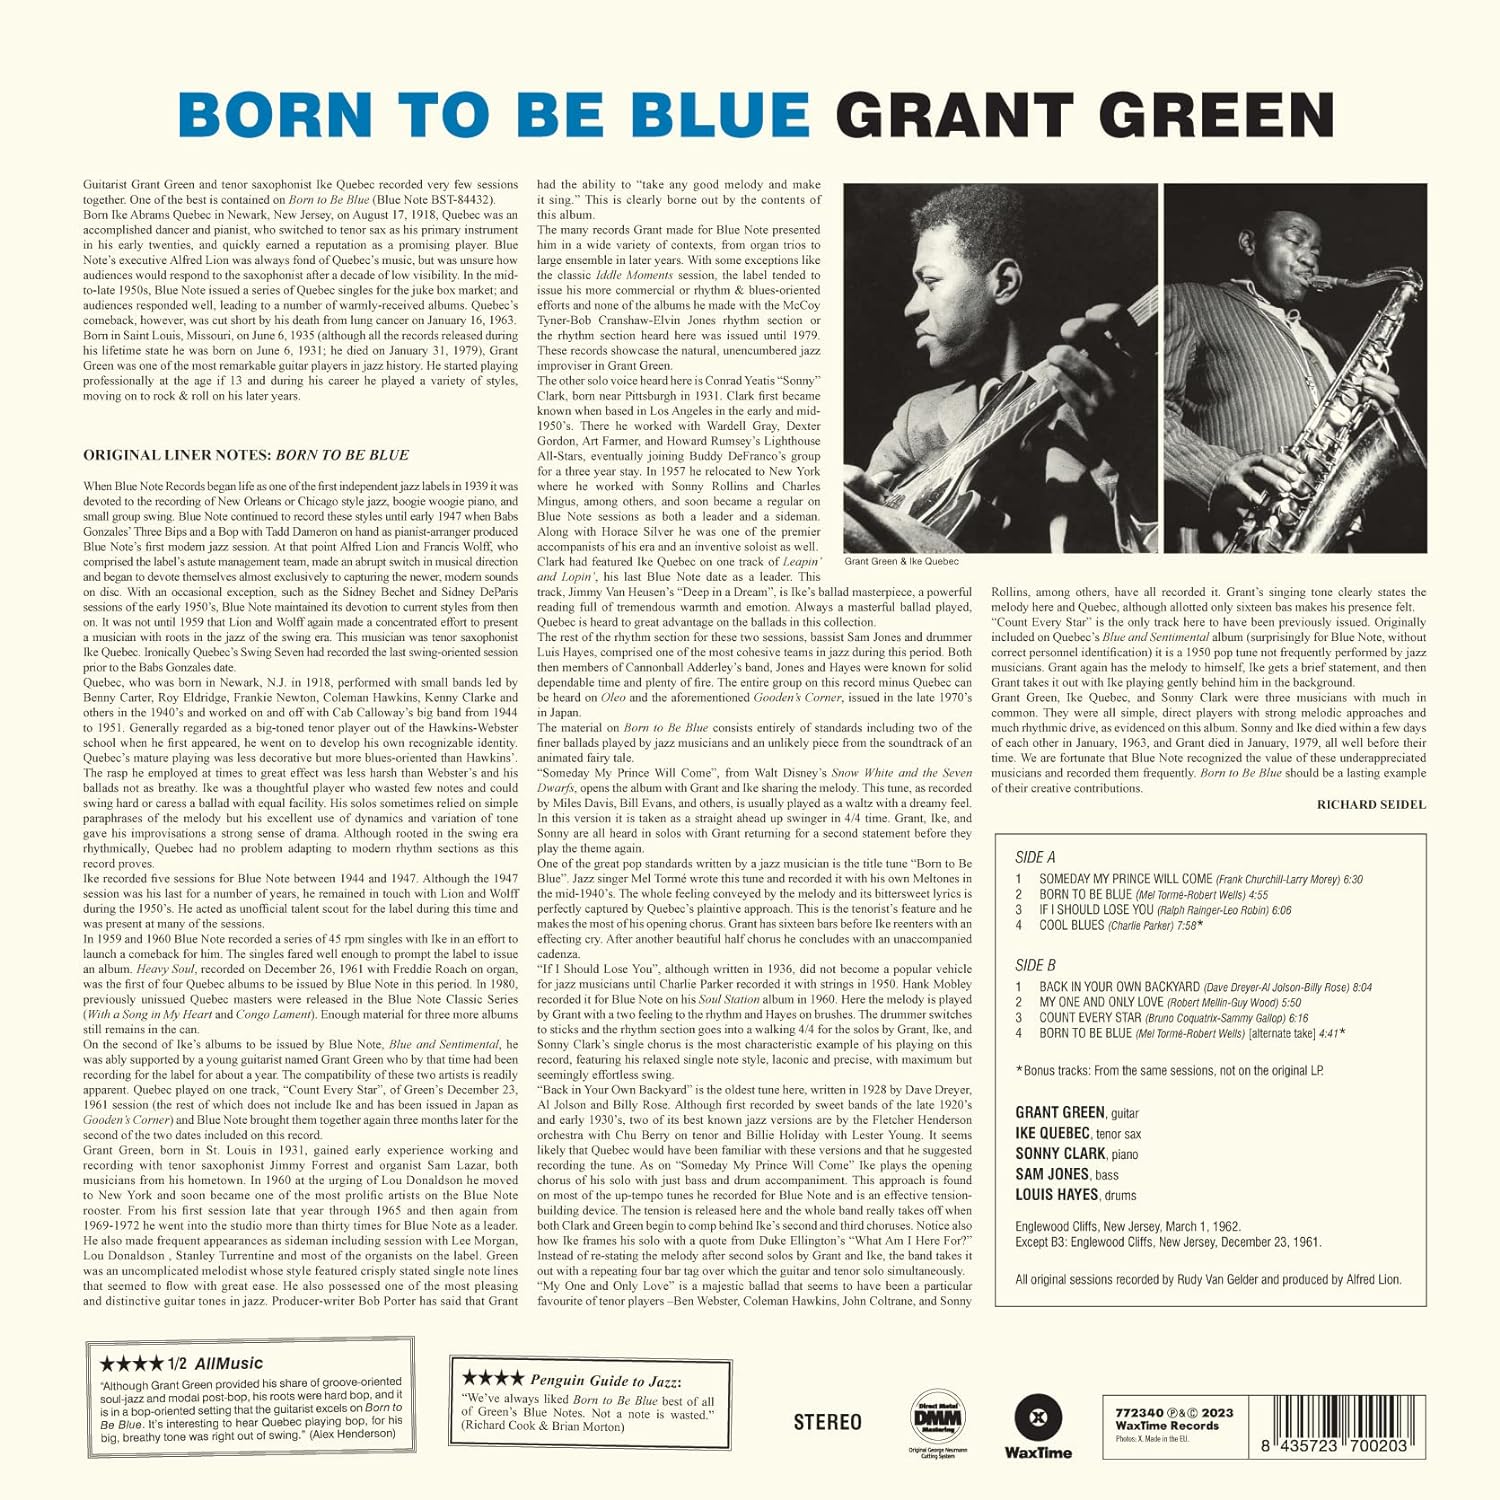 Grant Green (그랜트 그린) - Born To Be Blue [LP]